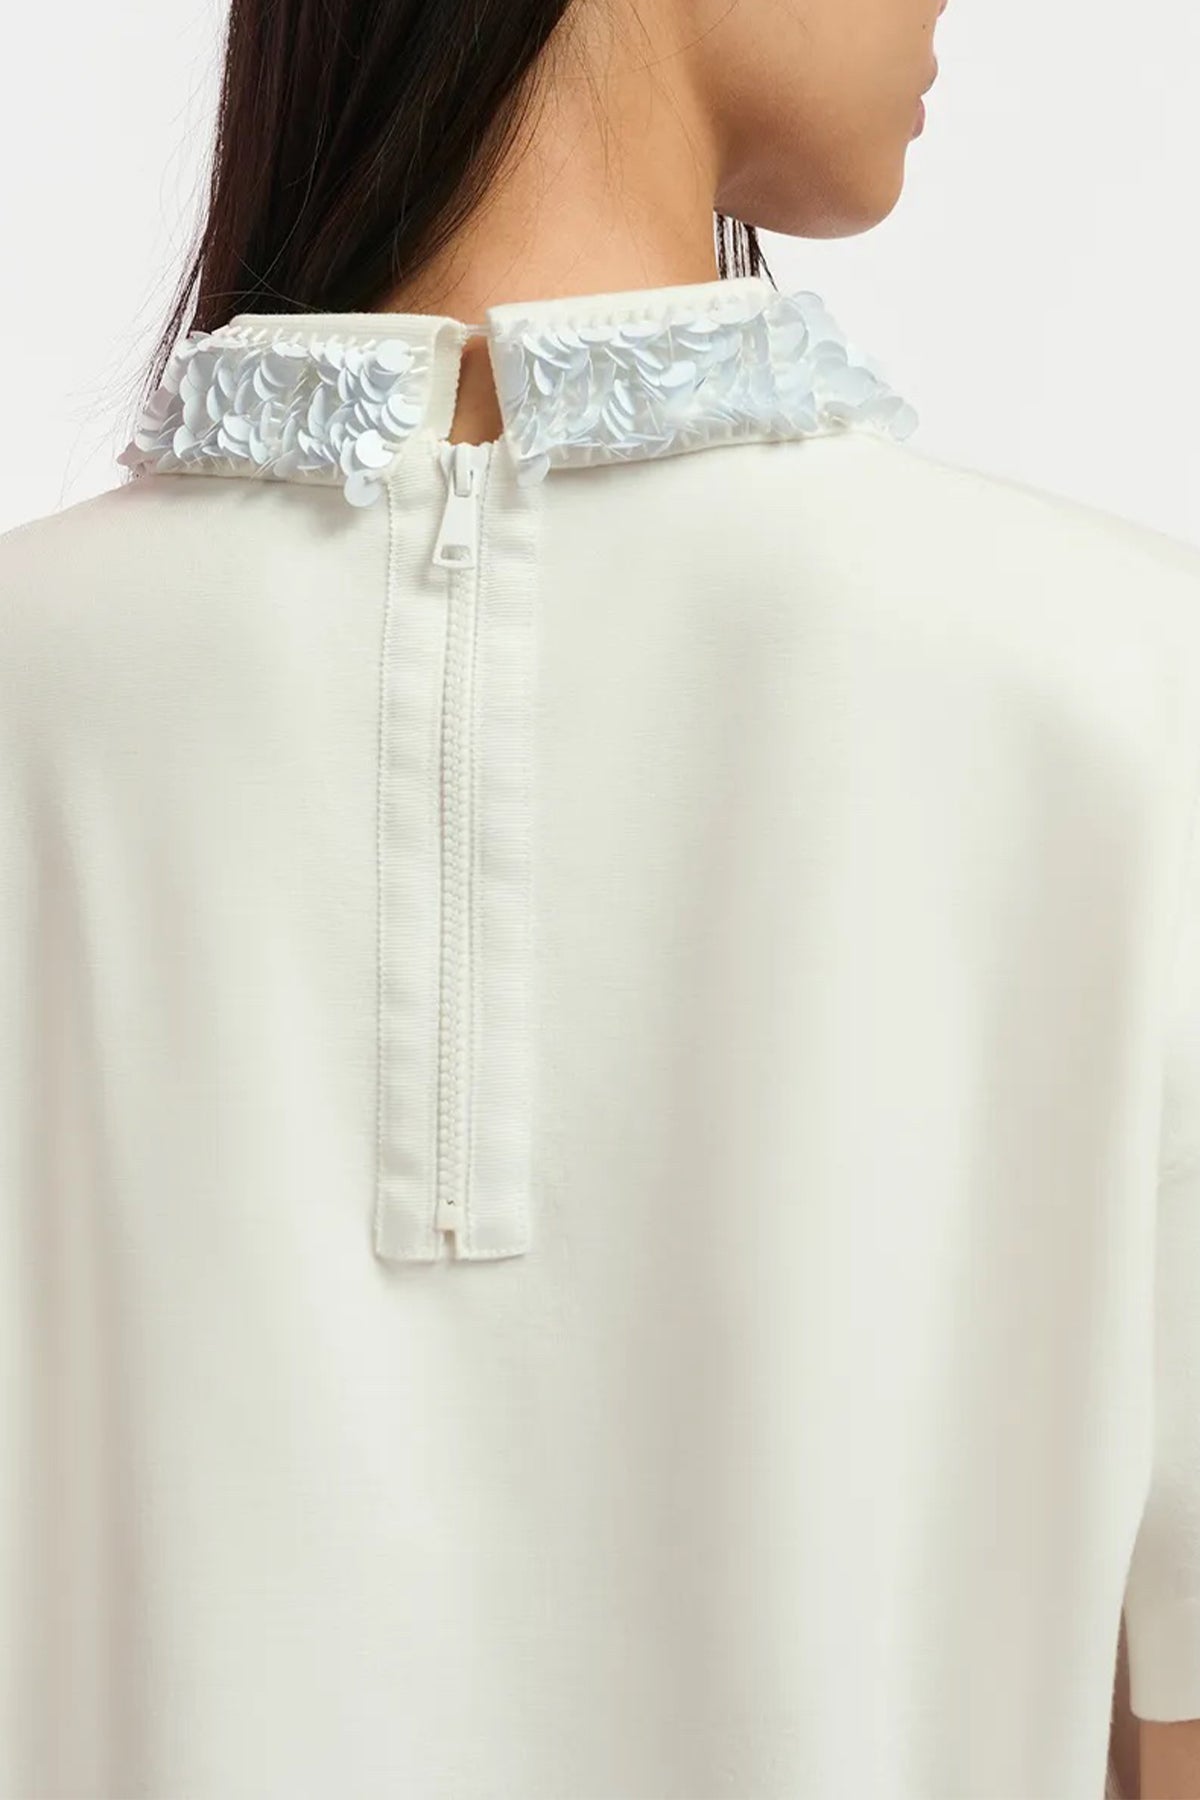 Filano Sequin - Embellished Collar in Off - White - shop - olivia.com